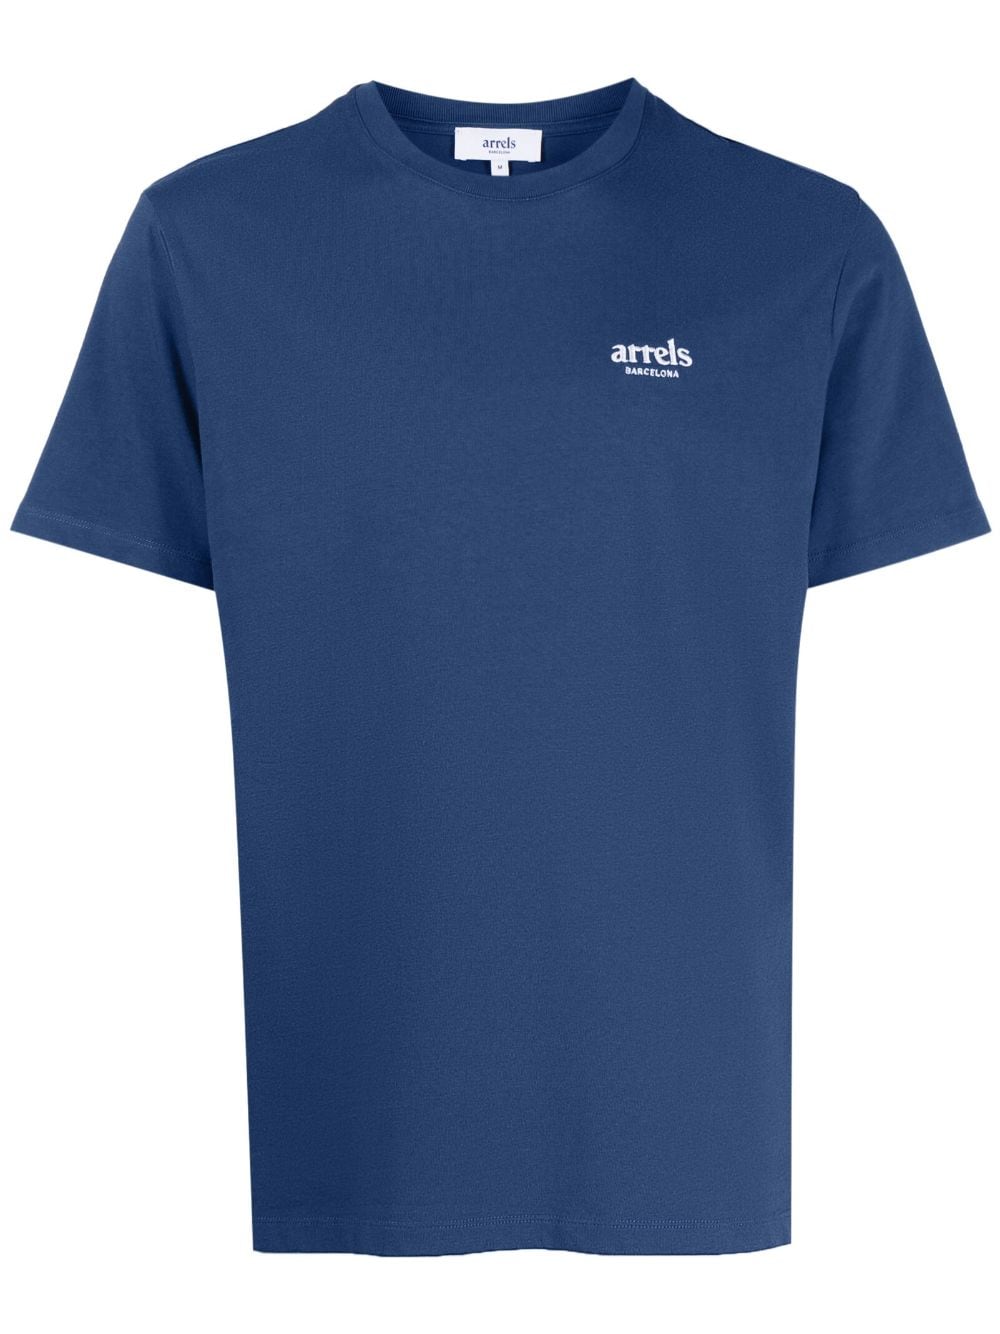 arrels barcelona t-shirt en coton à imprimé graphique - bleu